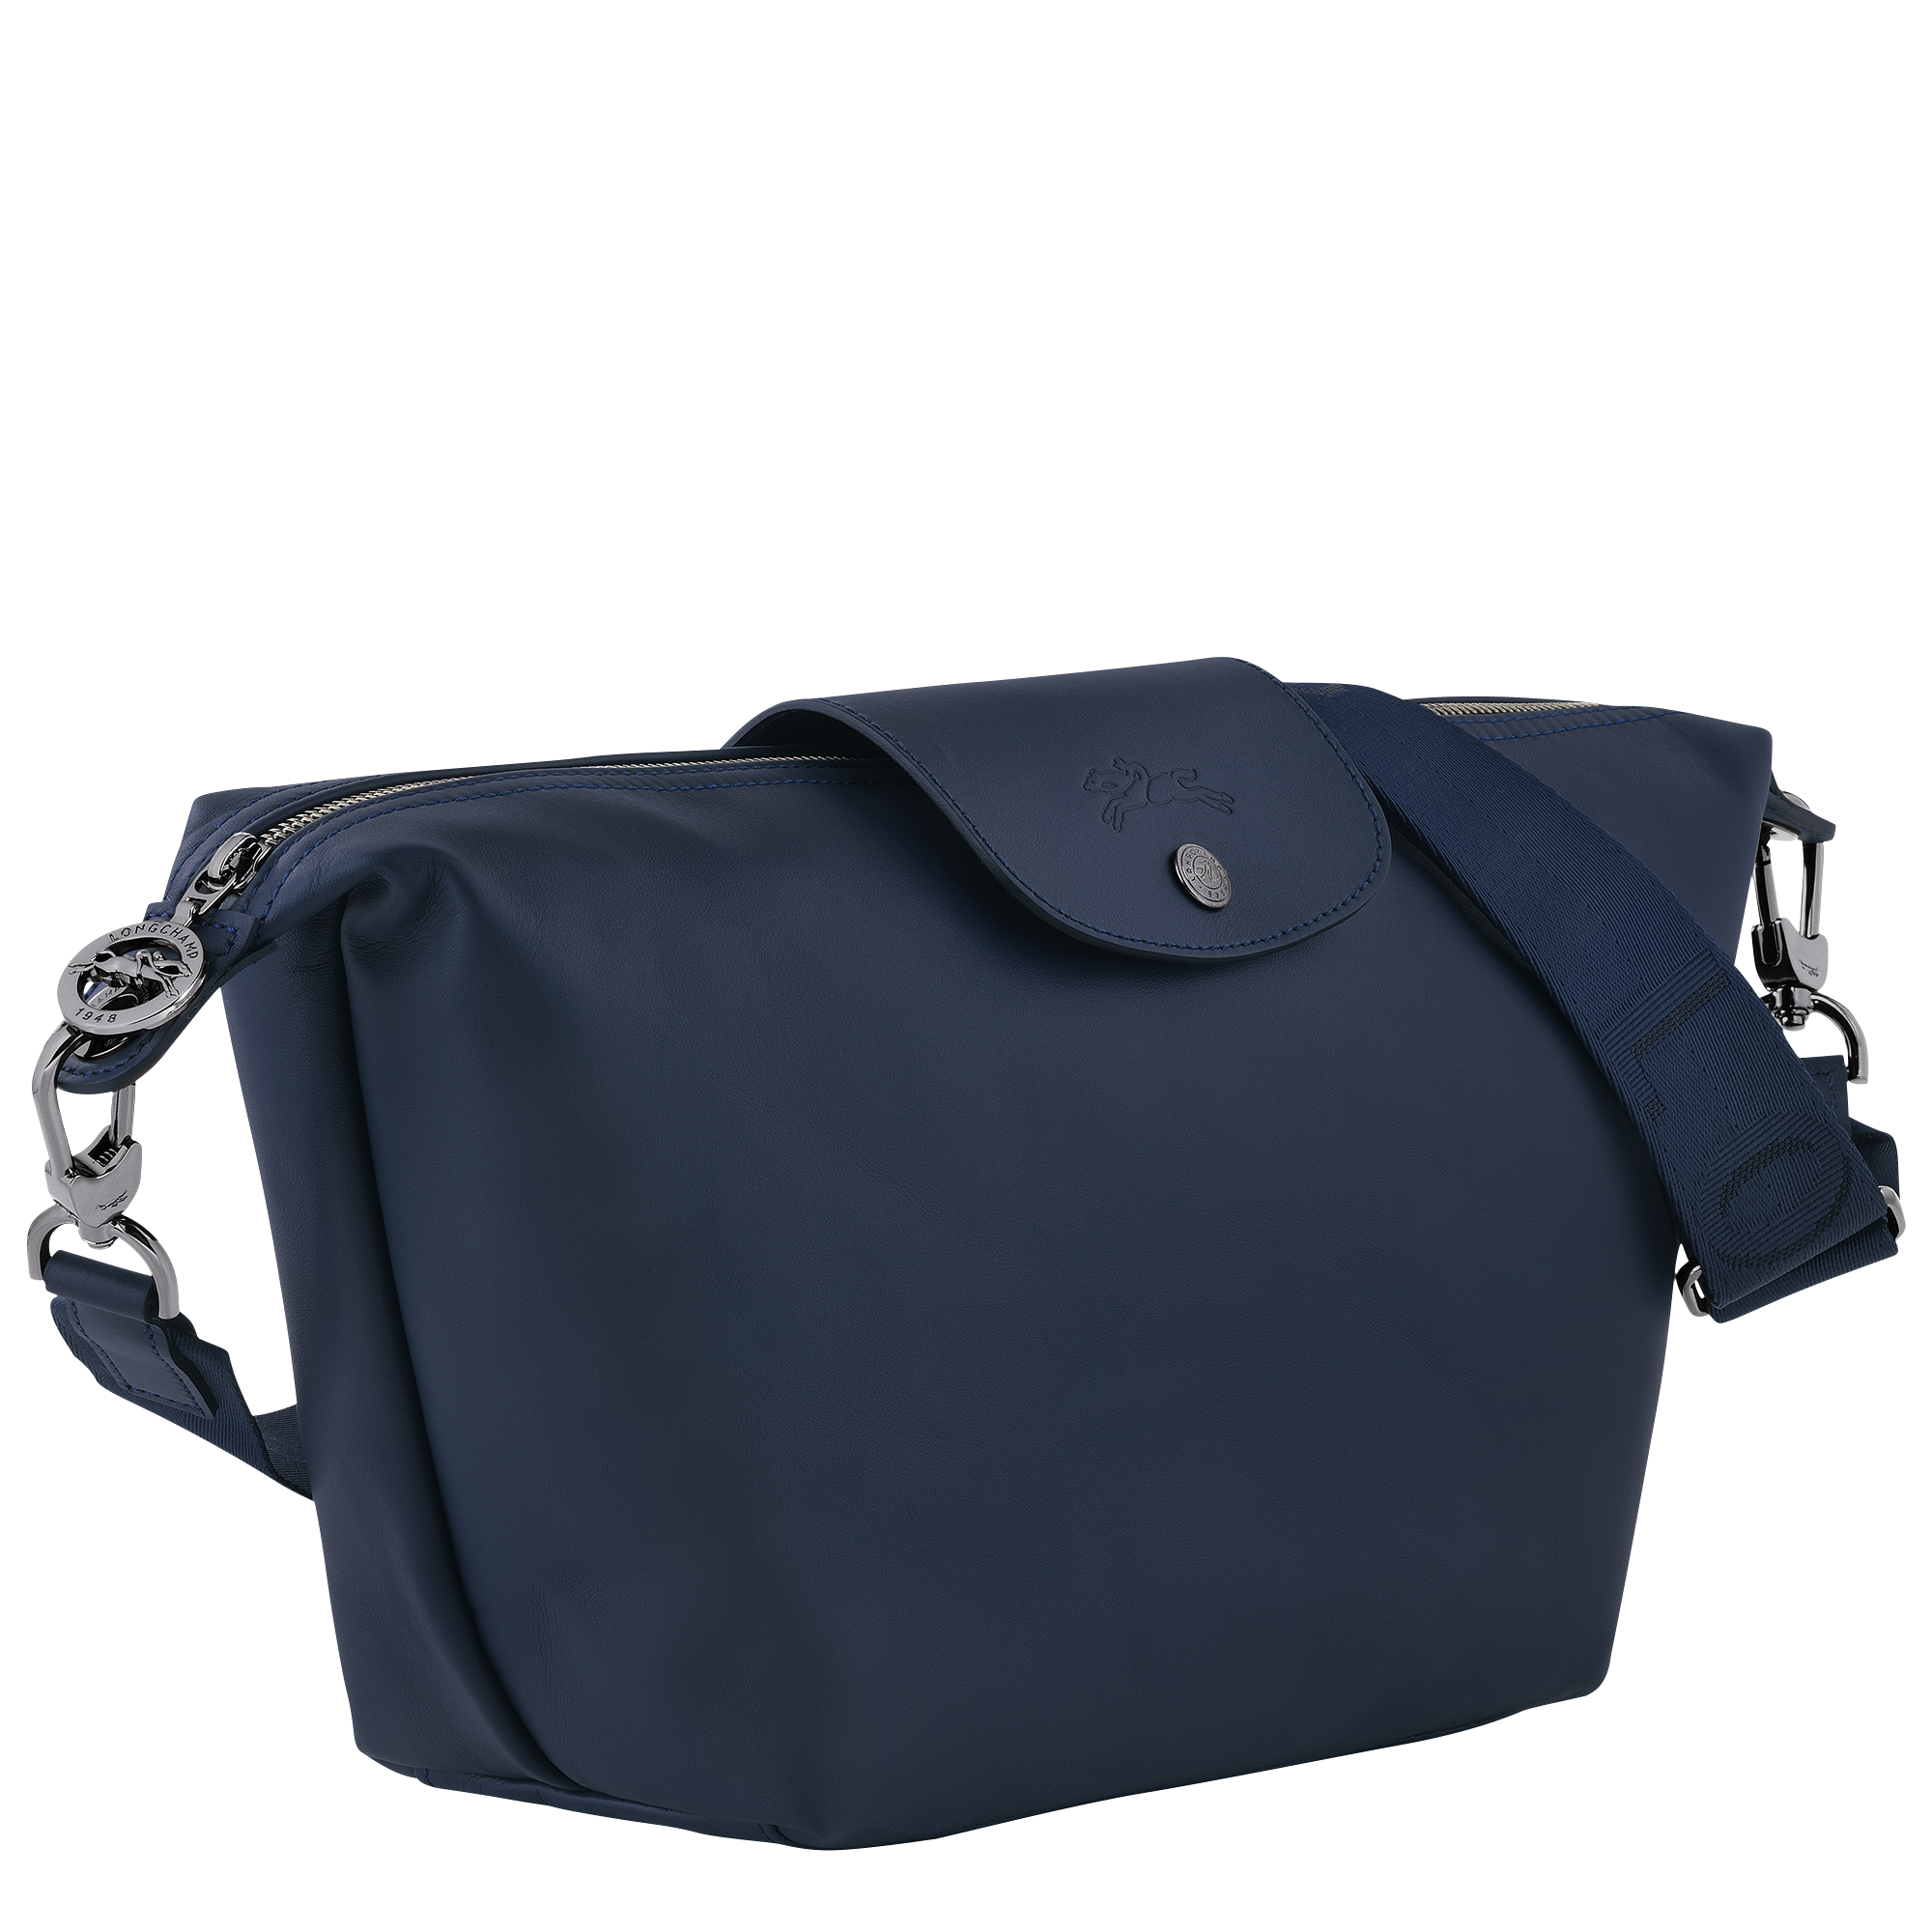 Longchamp Le Pliage Hobo Bag in Blue